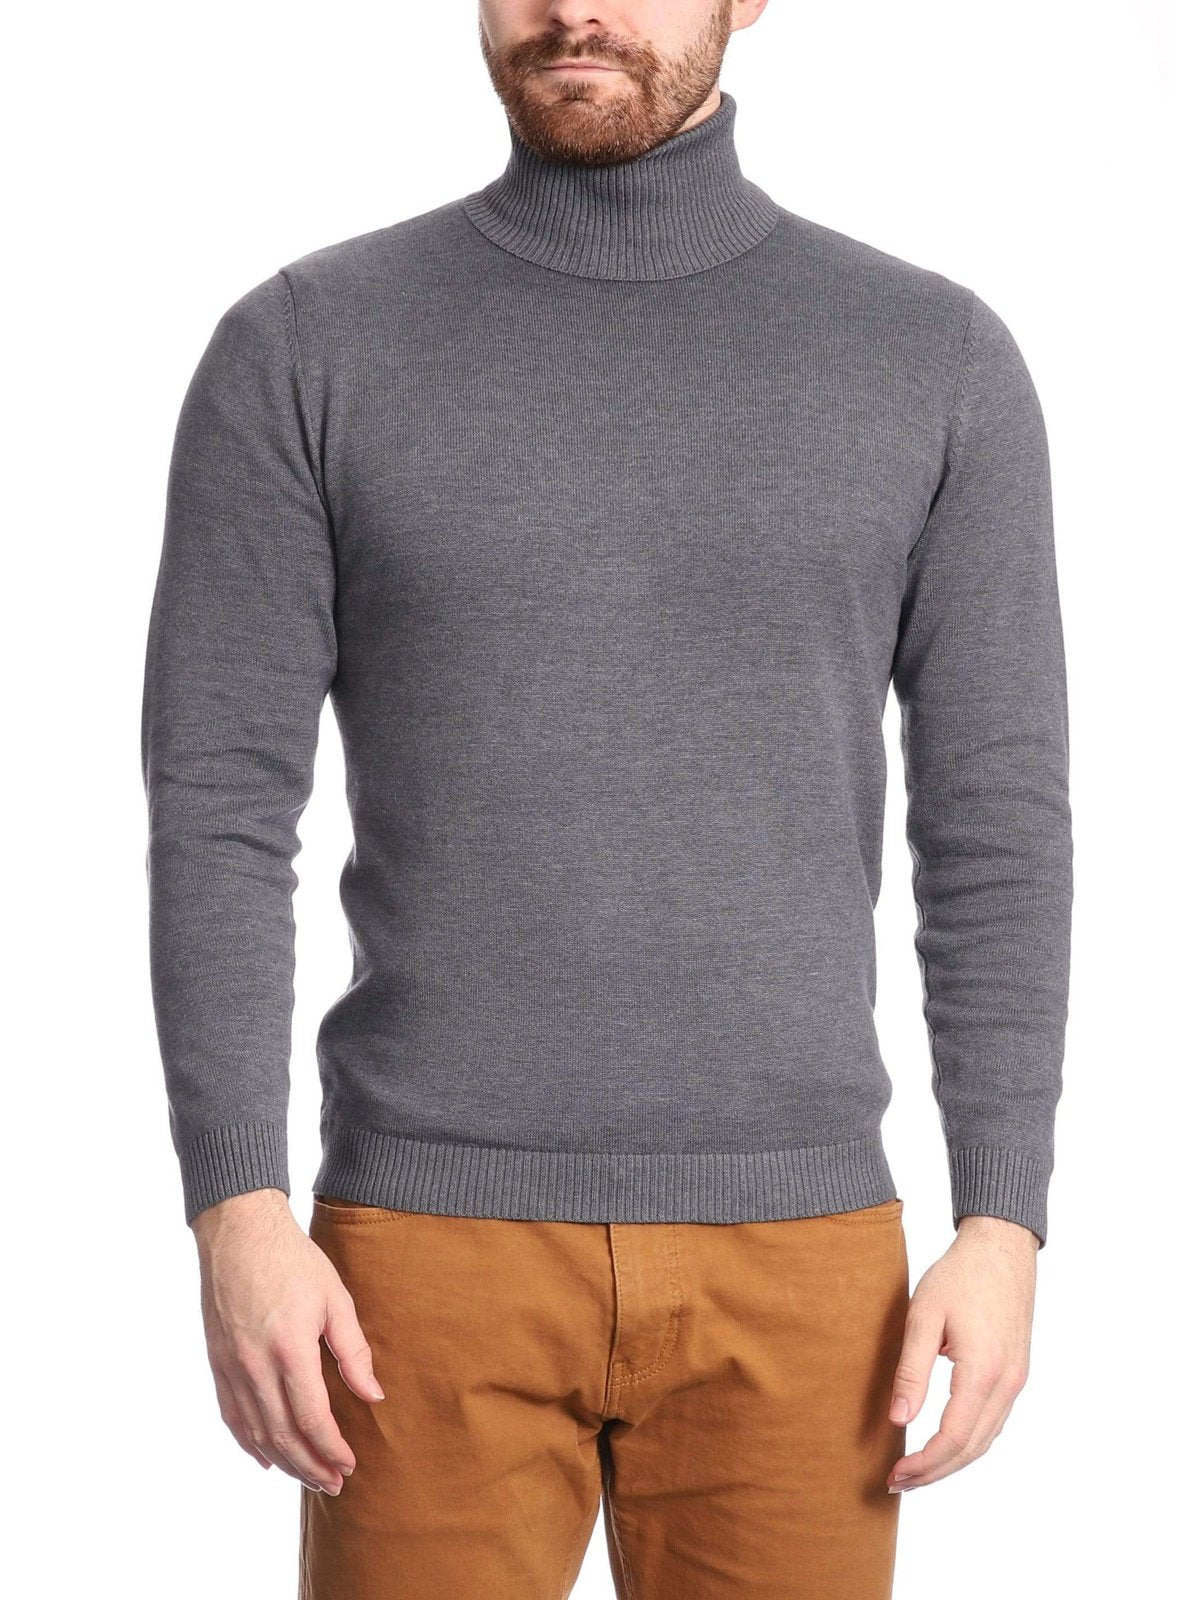 Arthur Black Default Category Migrated Gray / 6XL Arthur Black Men's Solid Gray Pullover Cotton Blend Turtleneck Sweater Shirt